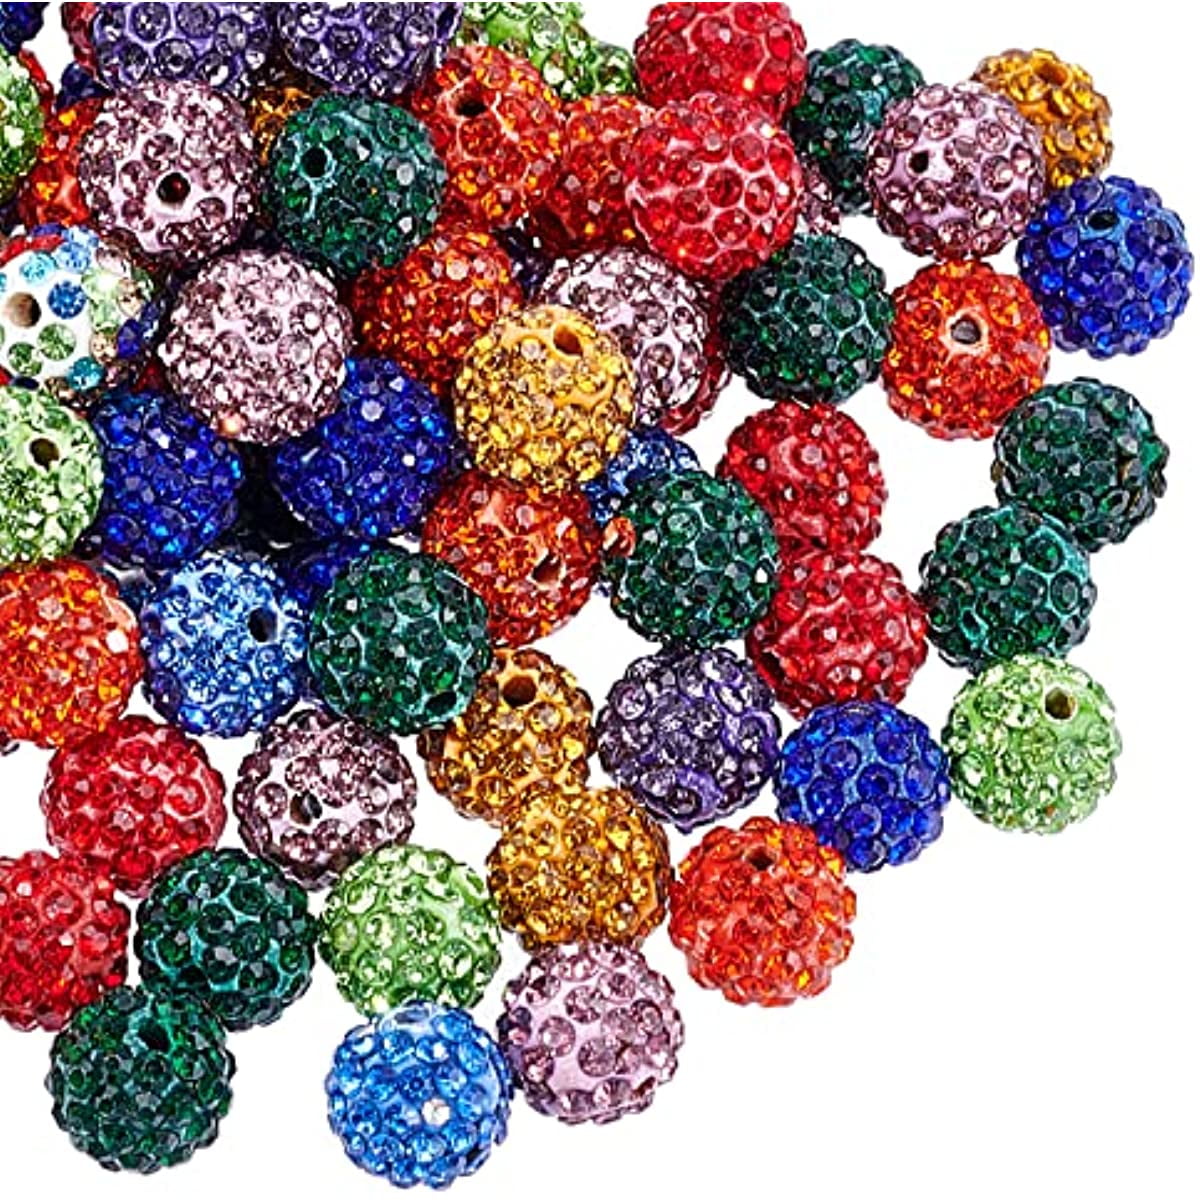 Disco Ball Rhinestones in 10mm, Flat Back Sphere Glass Crystal, Glue, MiniatureSweet, Kawaii Resin Crafts, Decoden Cabochons Supplies